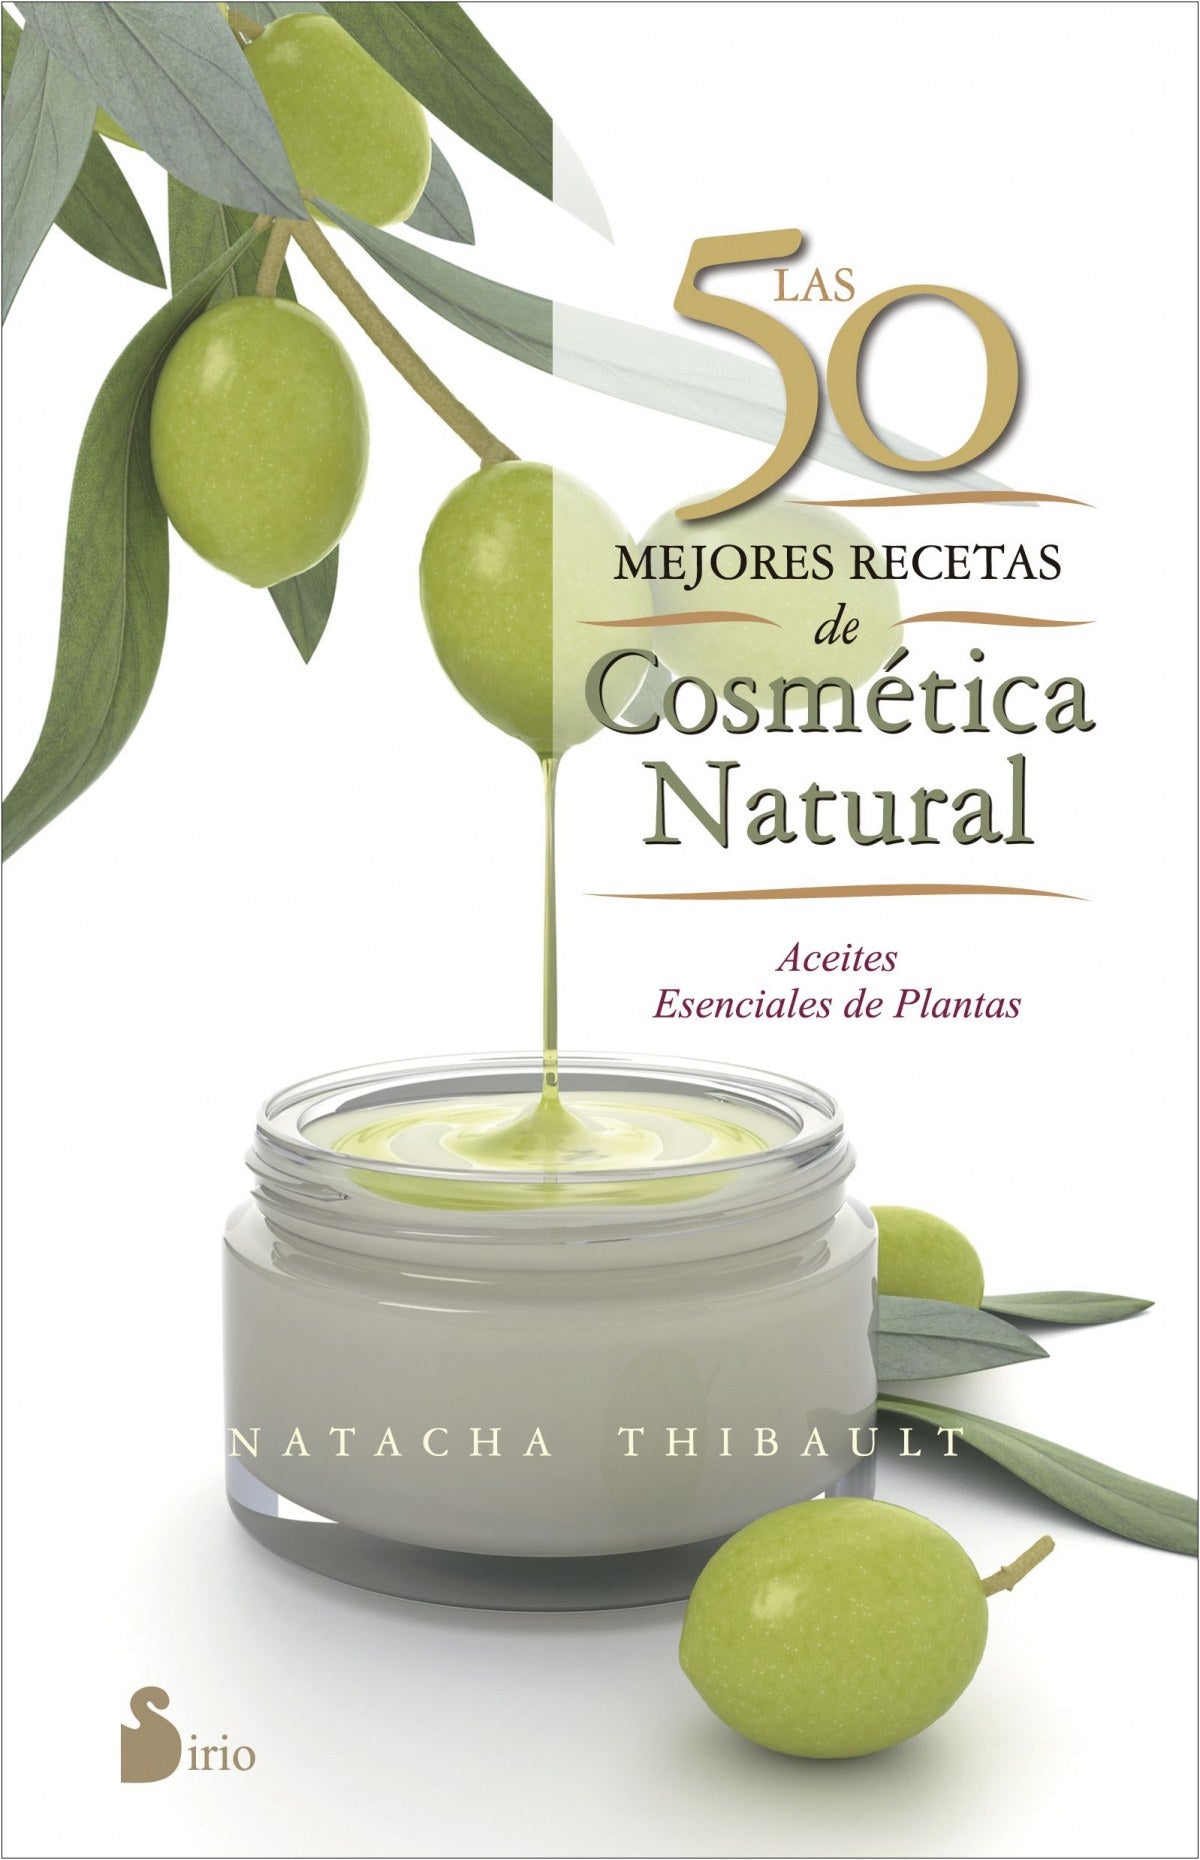  50 mejores recetas de cosmética natural 